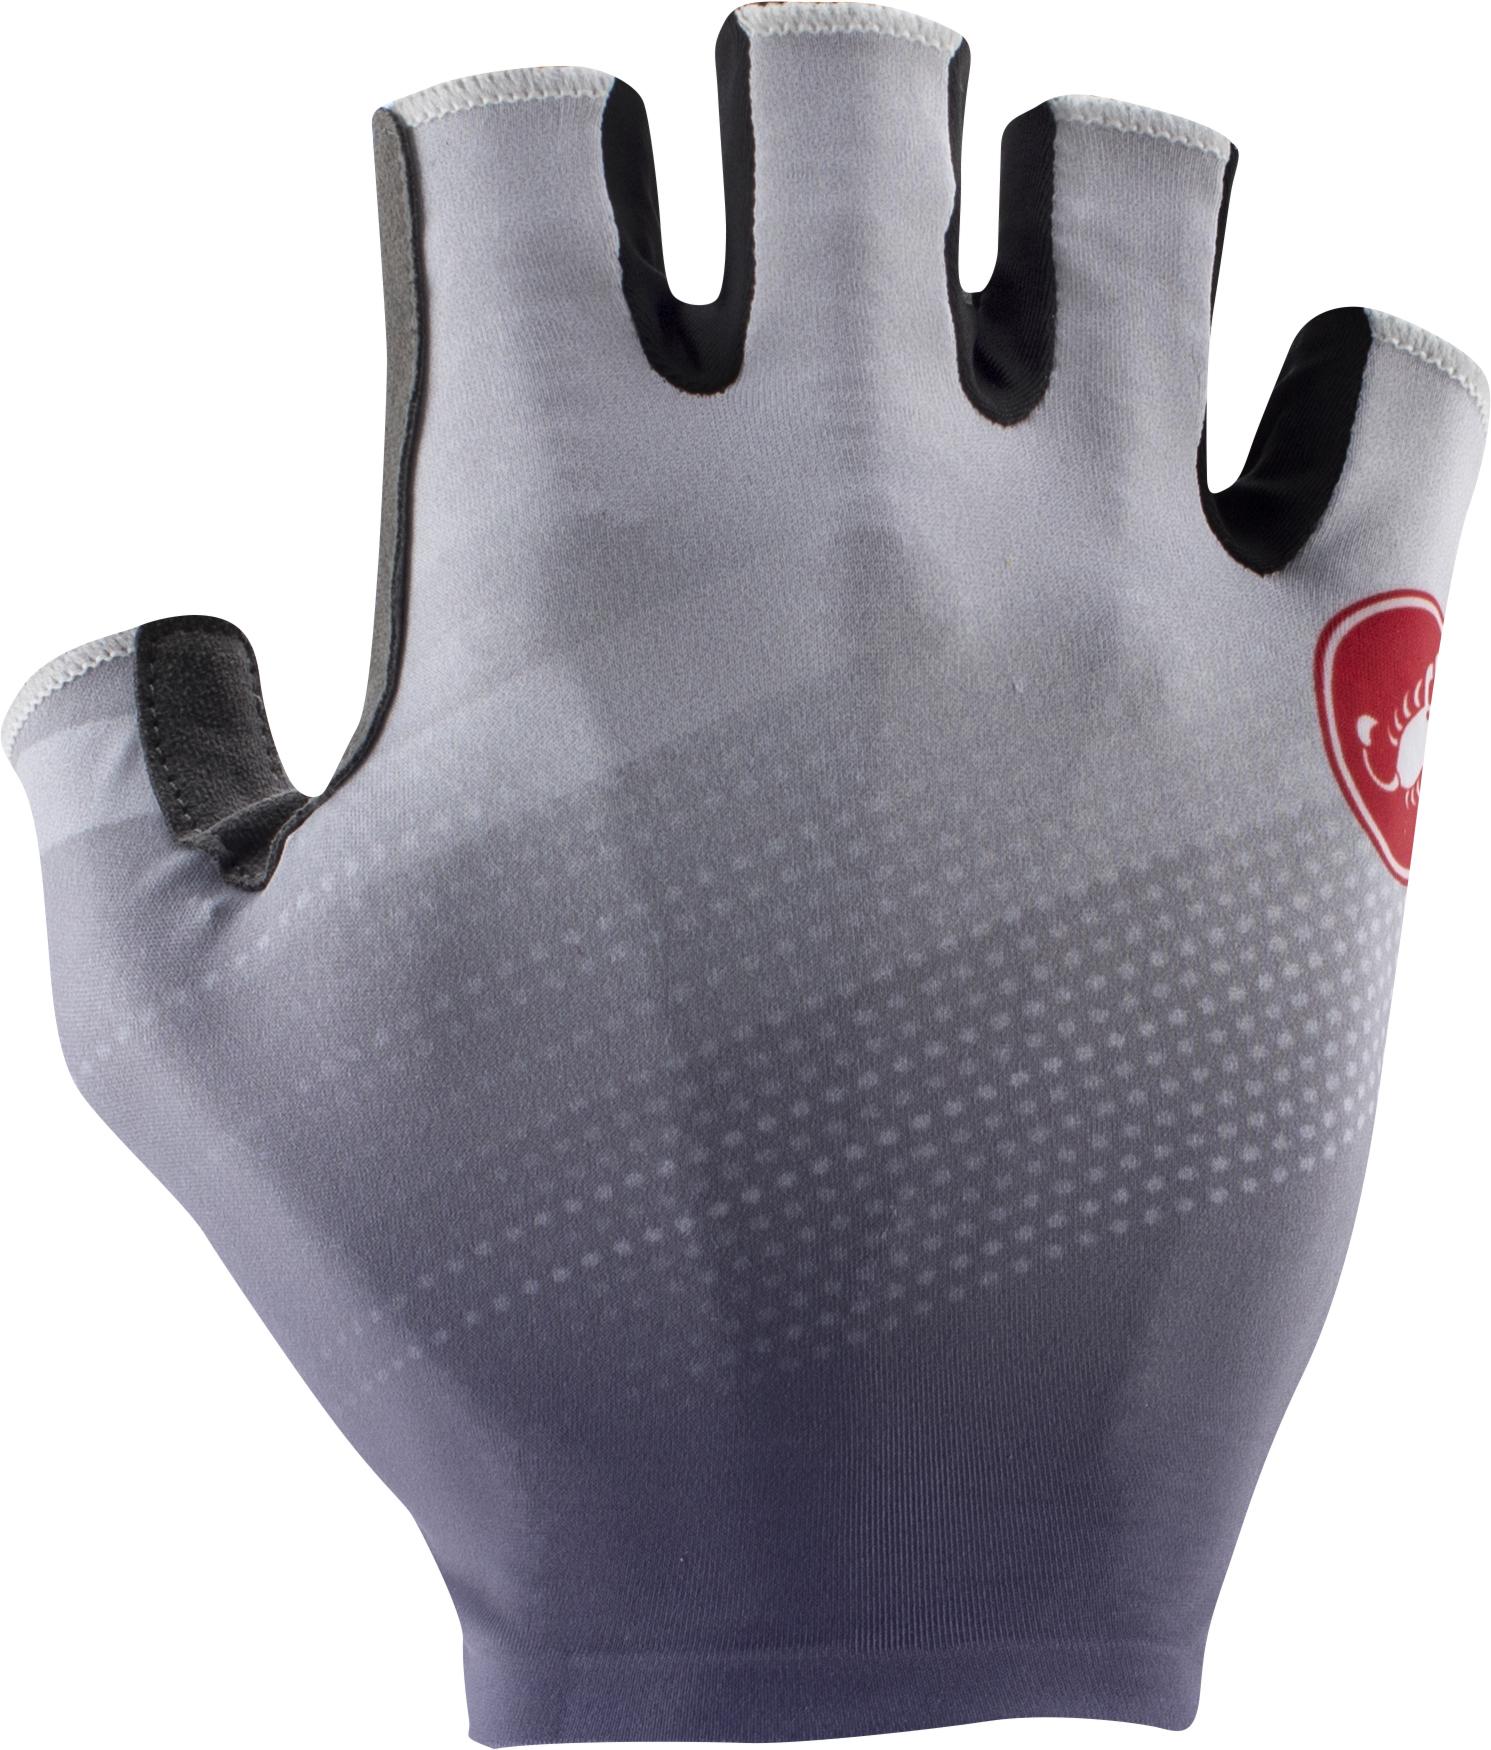 Castelli Competizione 2 Cycling Gloves - Silver Grey